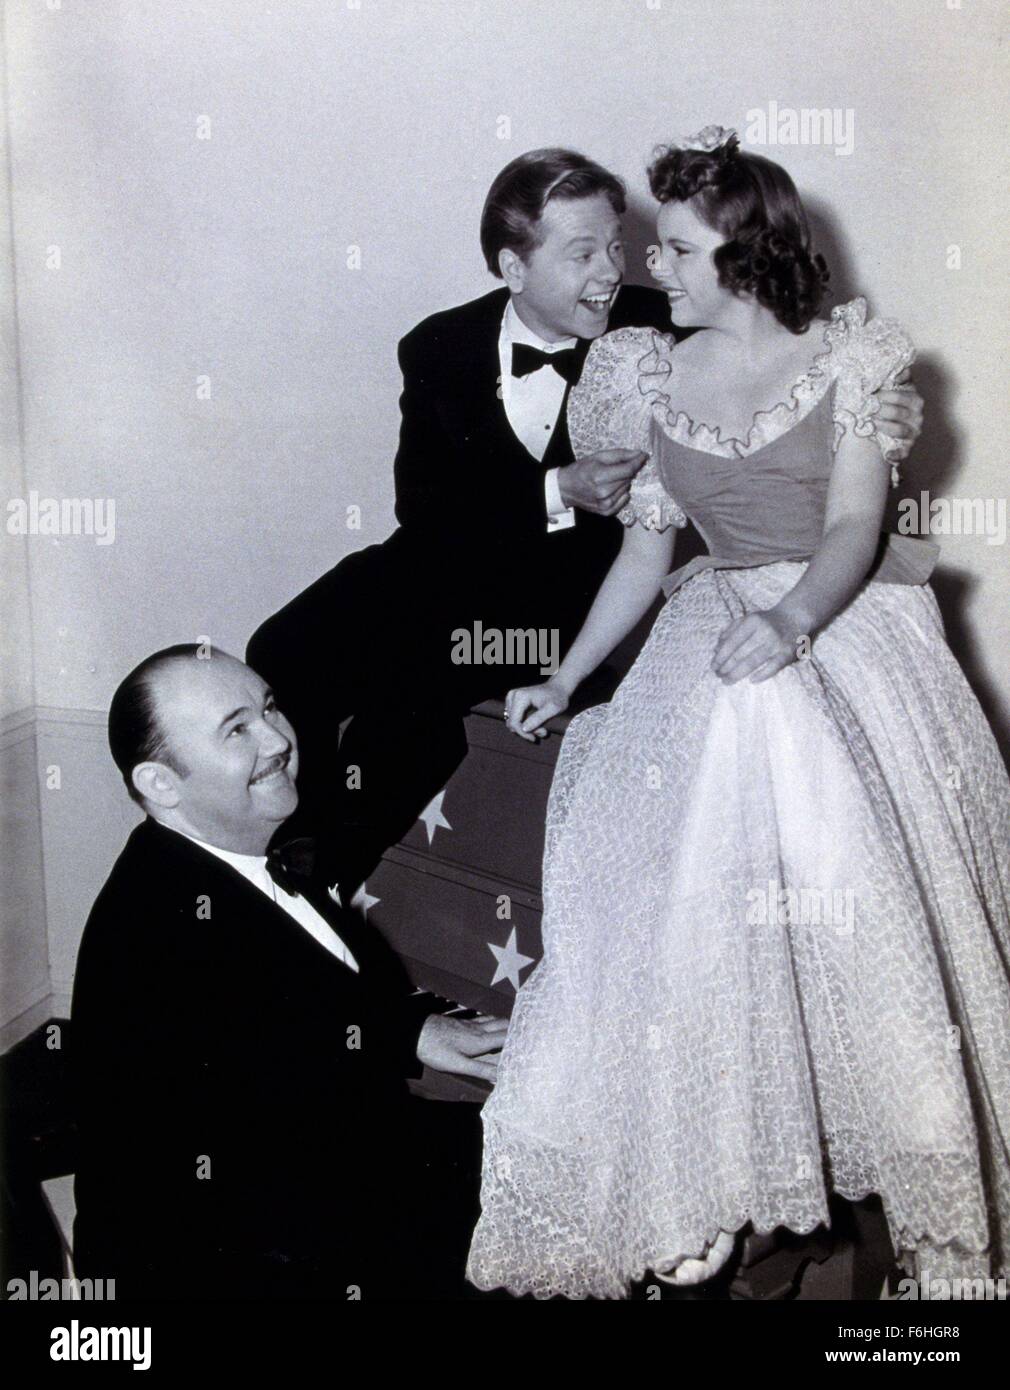 1940, Filmtitel: STRIKE UP THE BAND, Regisseur: BUSBY BERKELEY, Studio: MGM, abgebildet: BUSBY BERKELEY, JUDY GARLAND, MICKEY ROONEY. (Bild Kredit: SNAP) Stockfoto